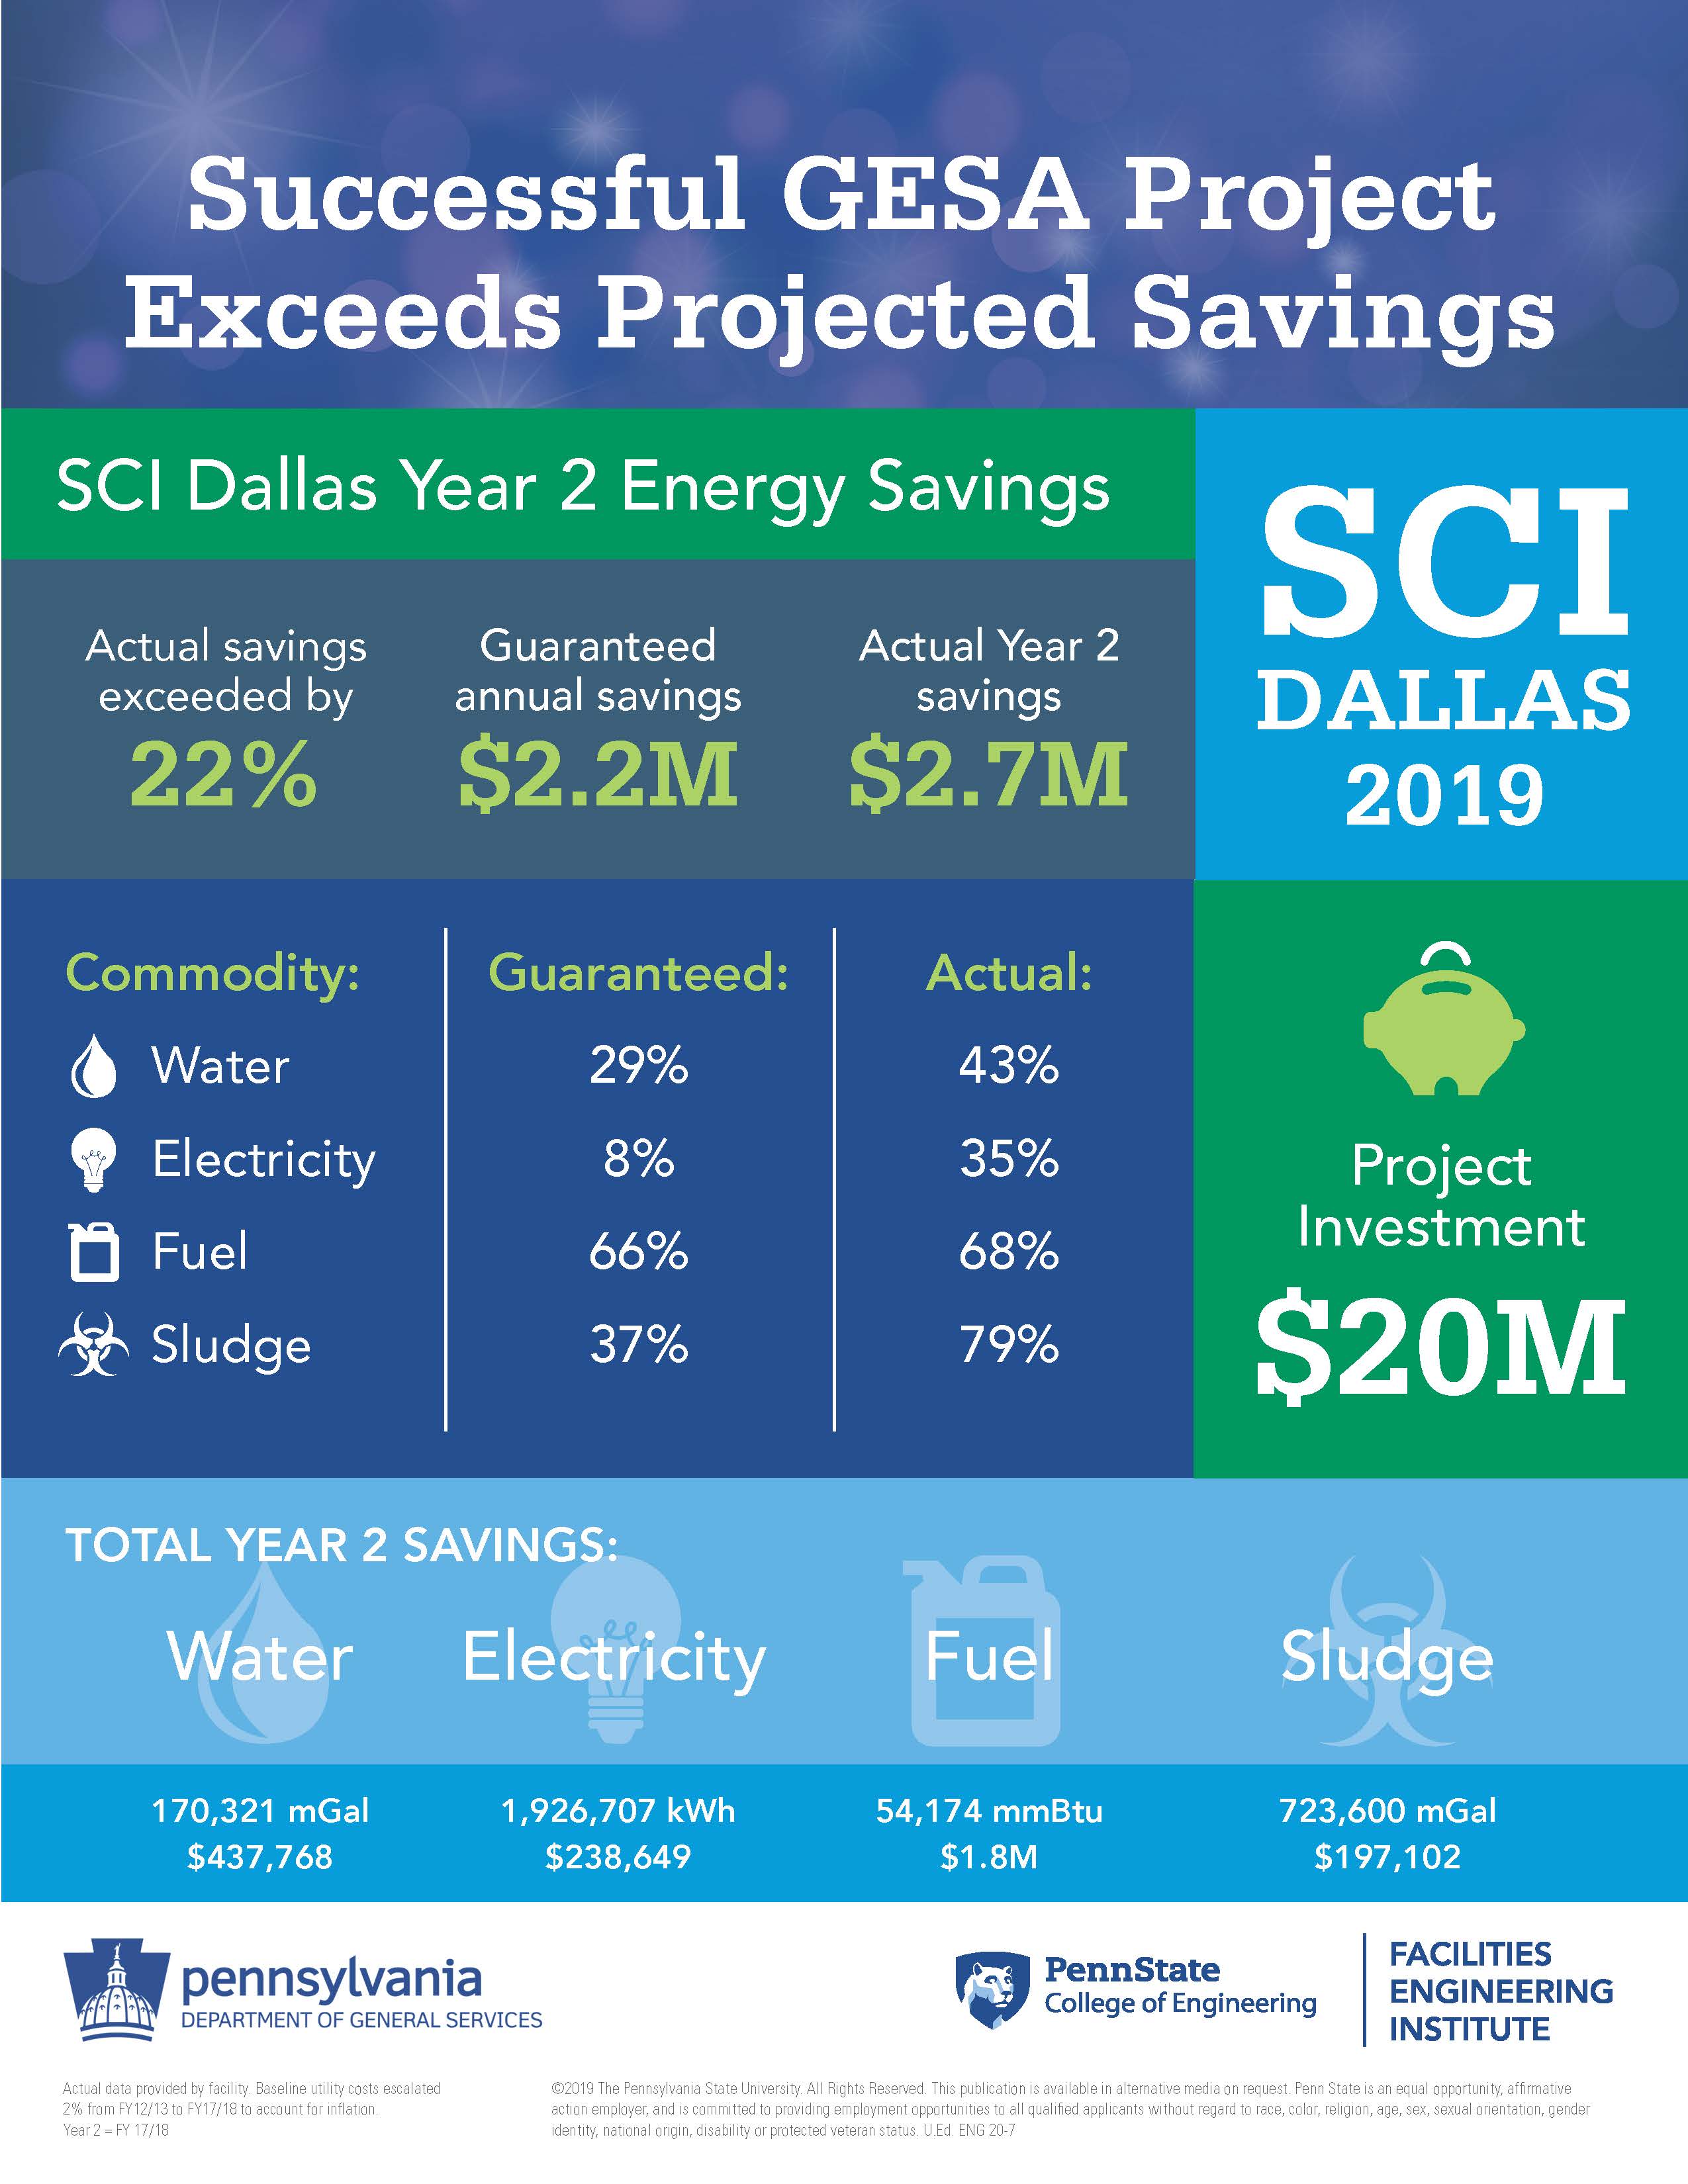 Managing Our Energy-SCI Dallas.jpg